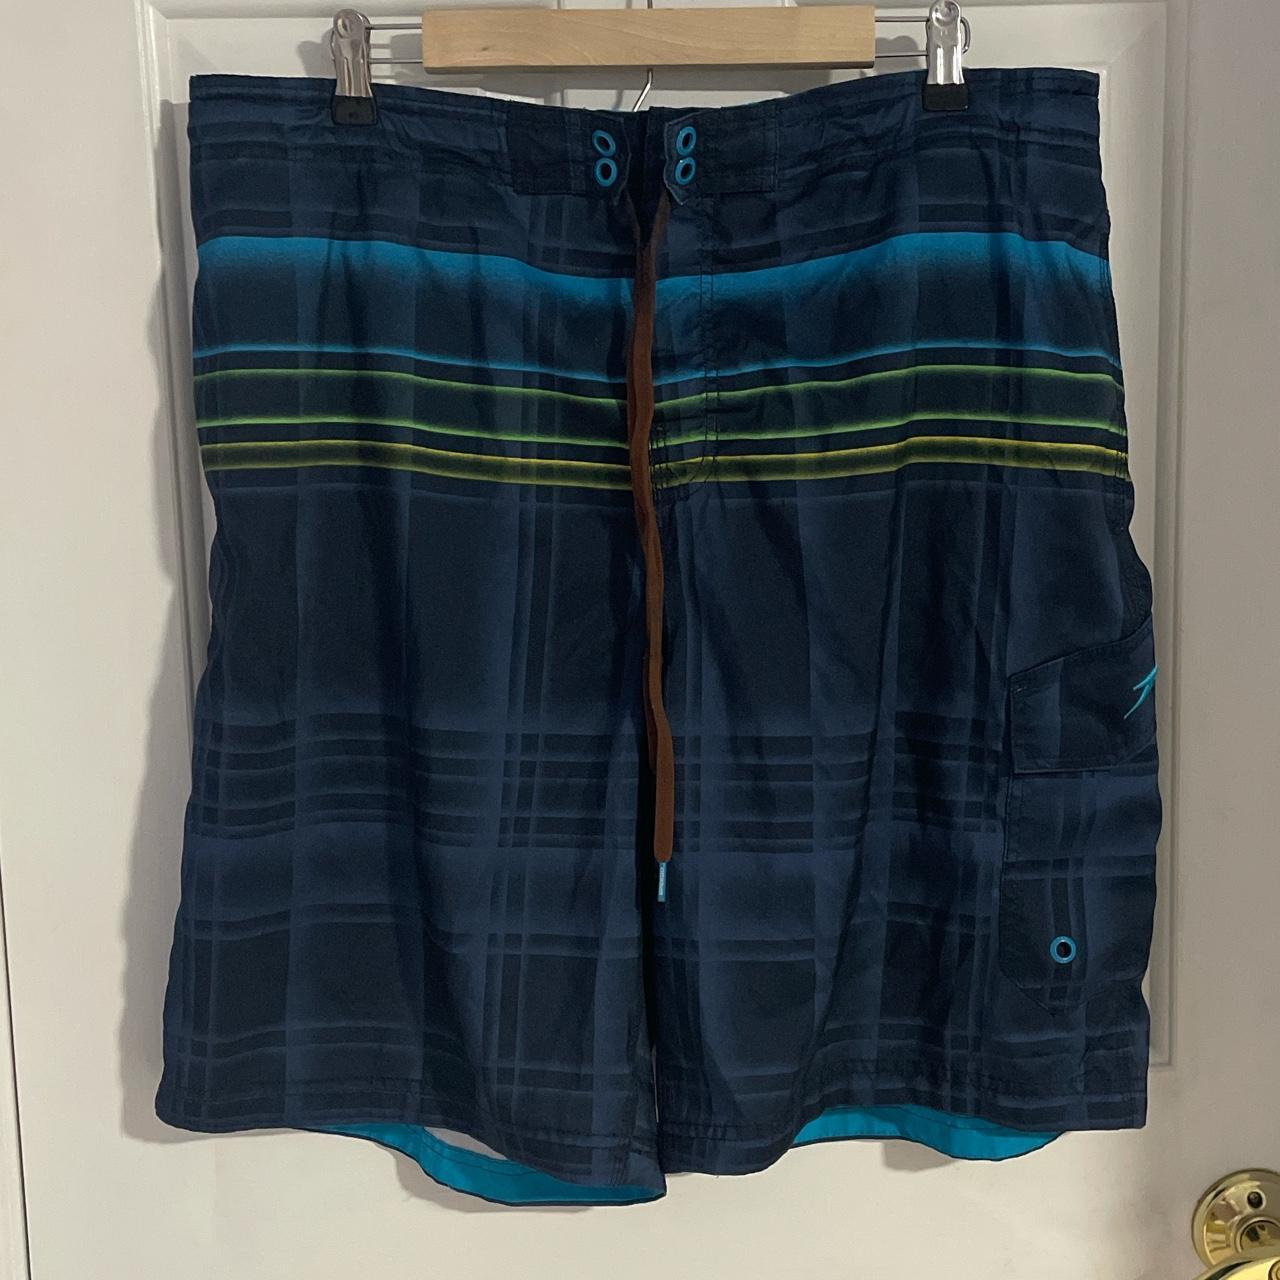 Product Image 2 - Men’s swim shorts (XL). In